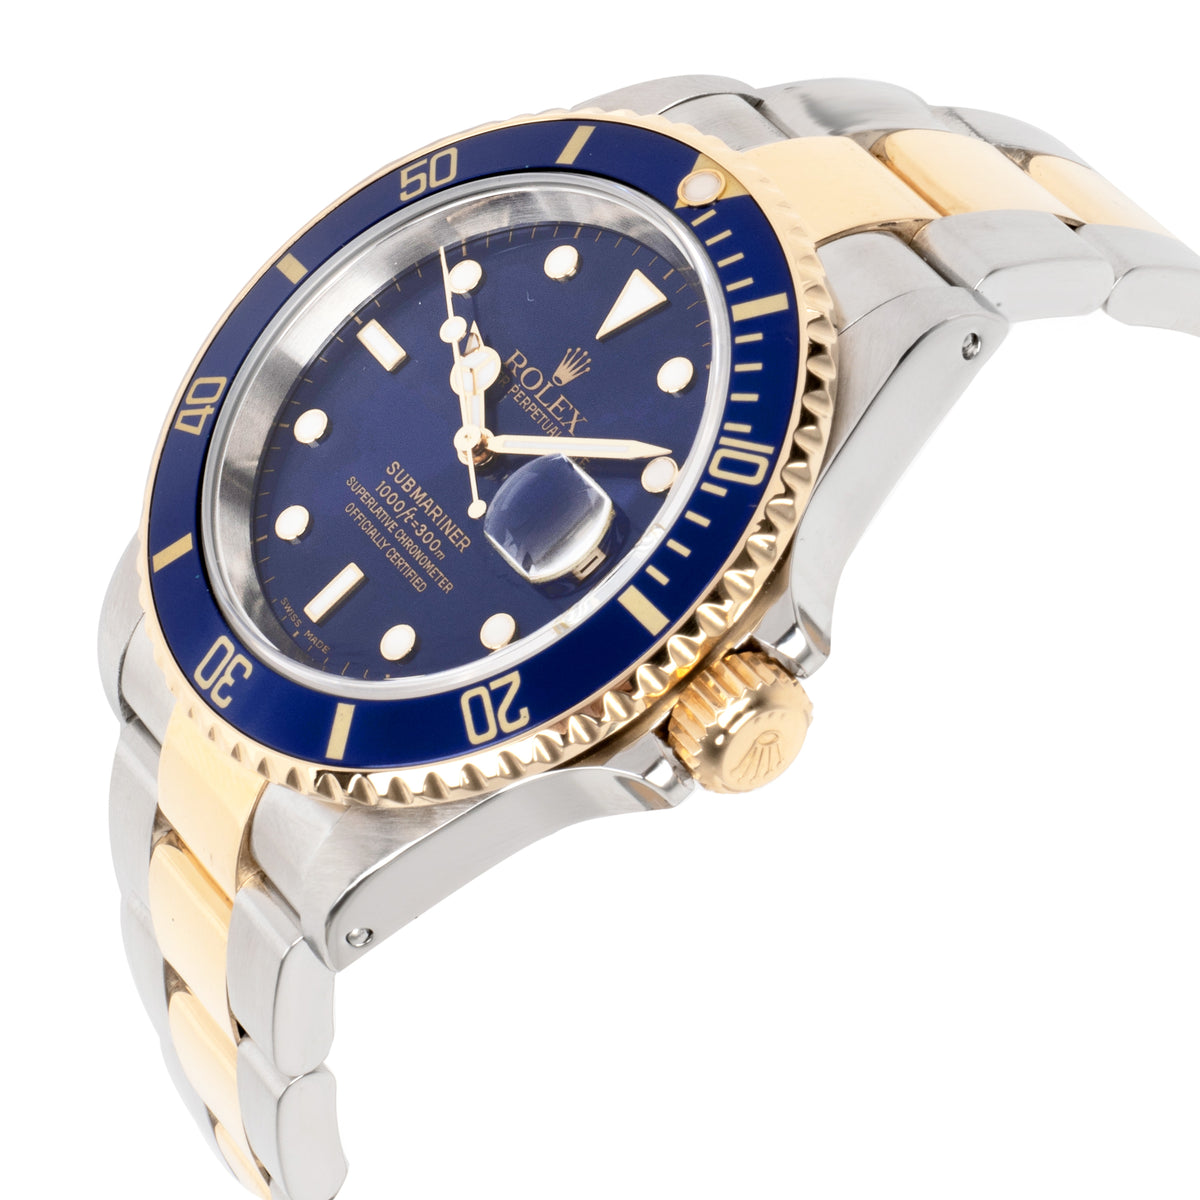 Rolex Submariner 16613 Men's Watch in 18kt Yellow Gold/Steel